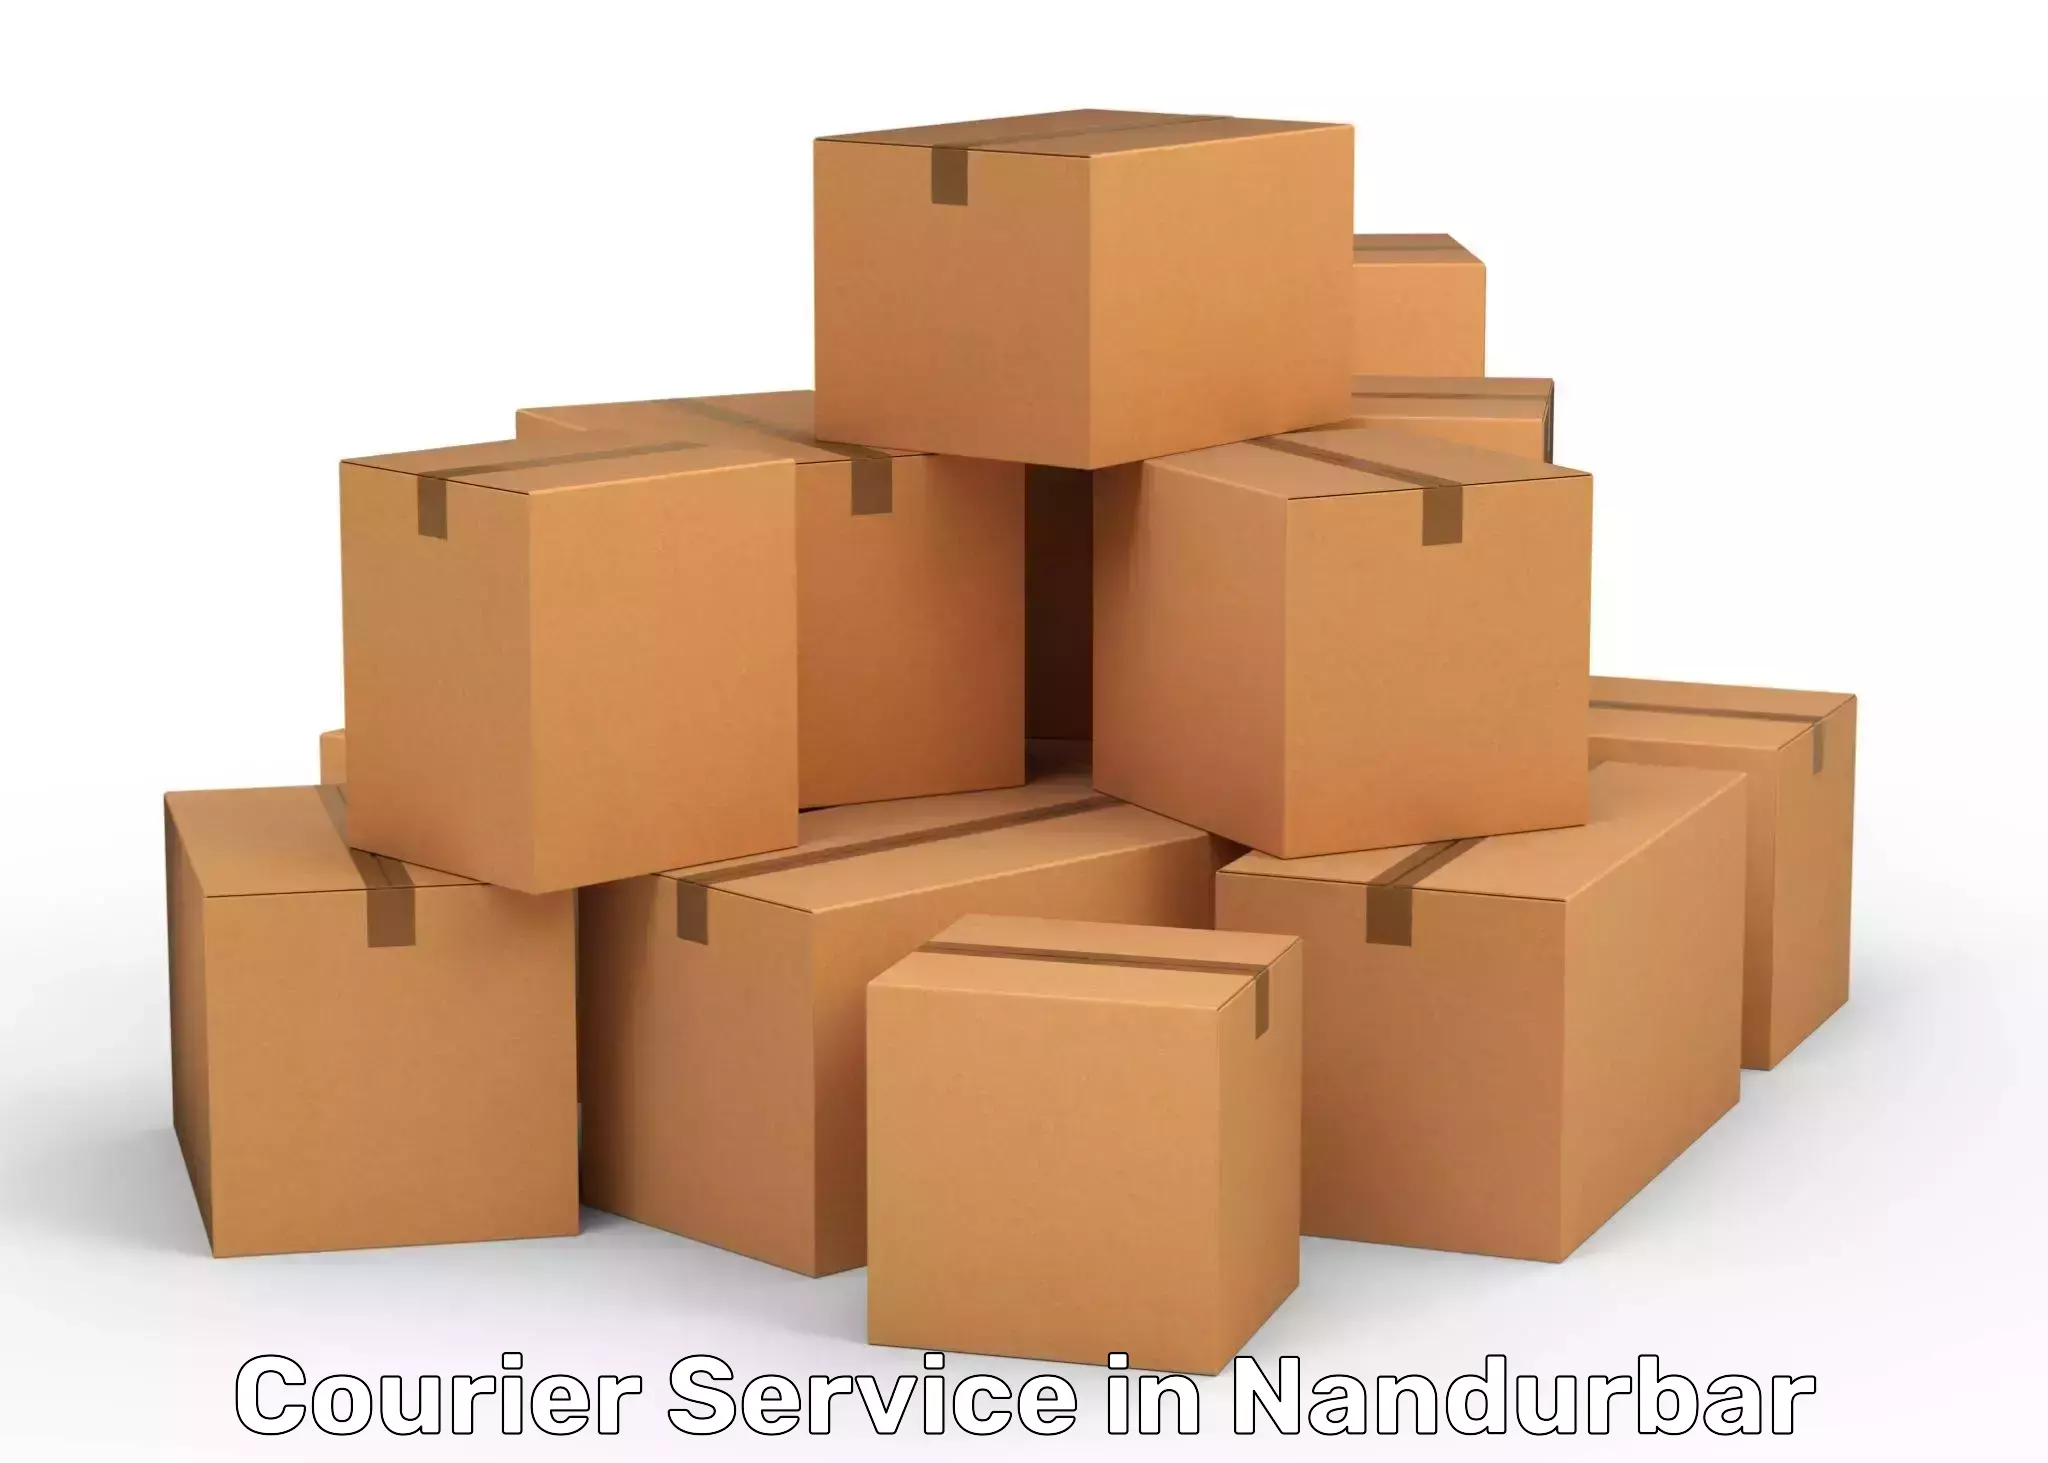 Bulk courier orders in Nandurbar